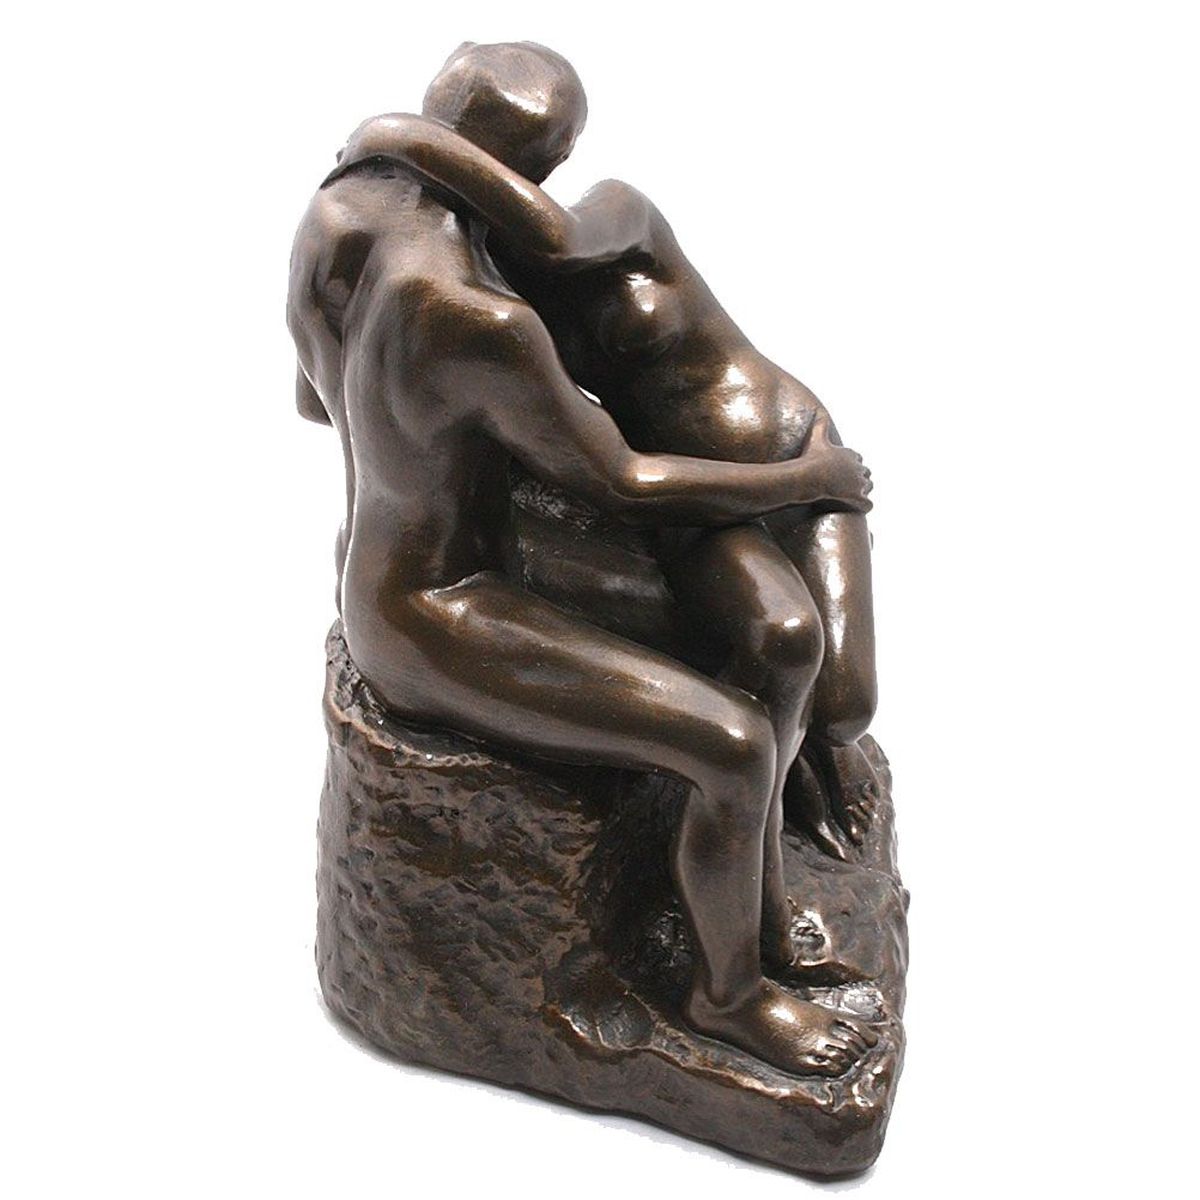 Figurine reproduction Le Baiser de Rodin